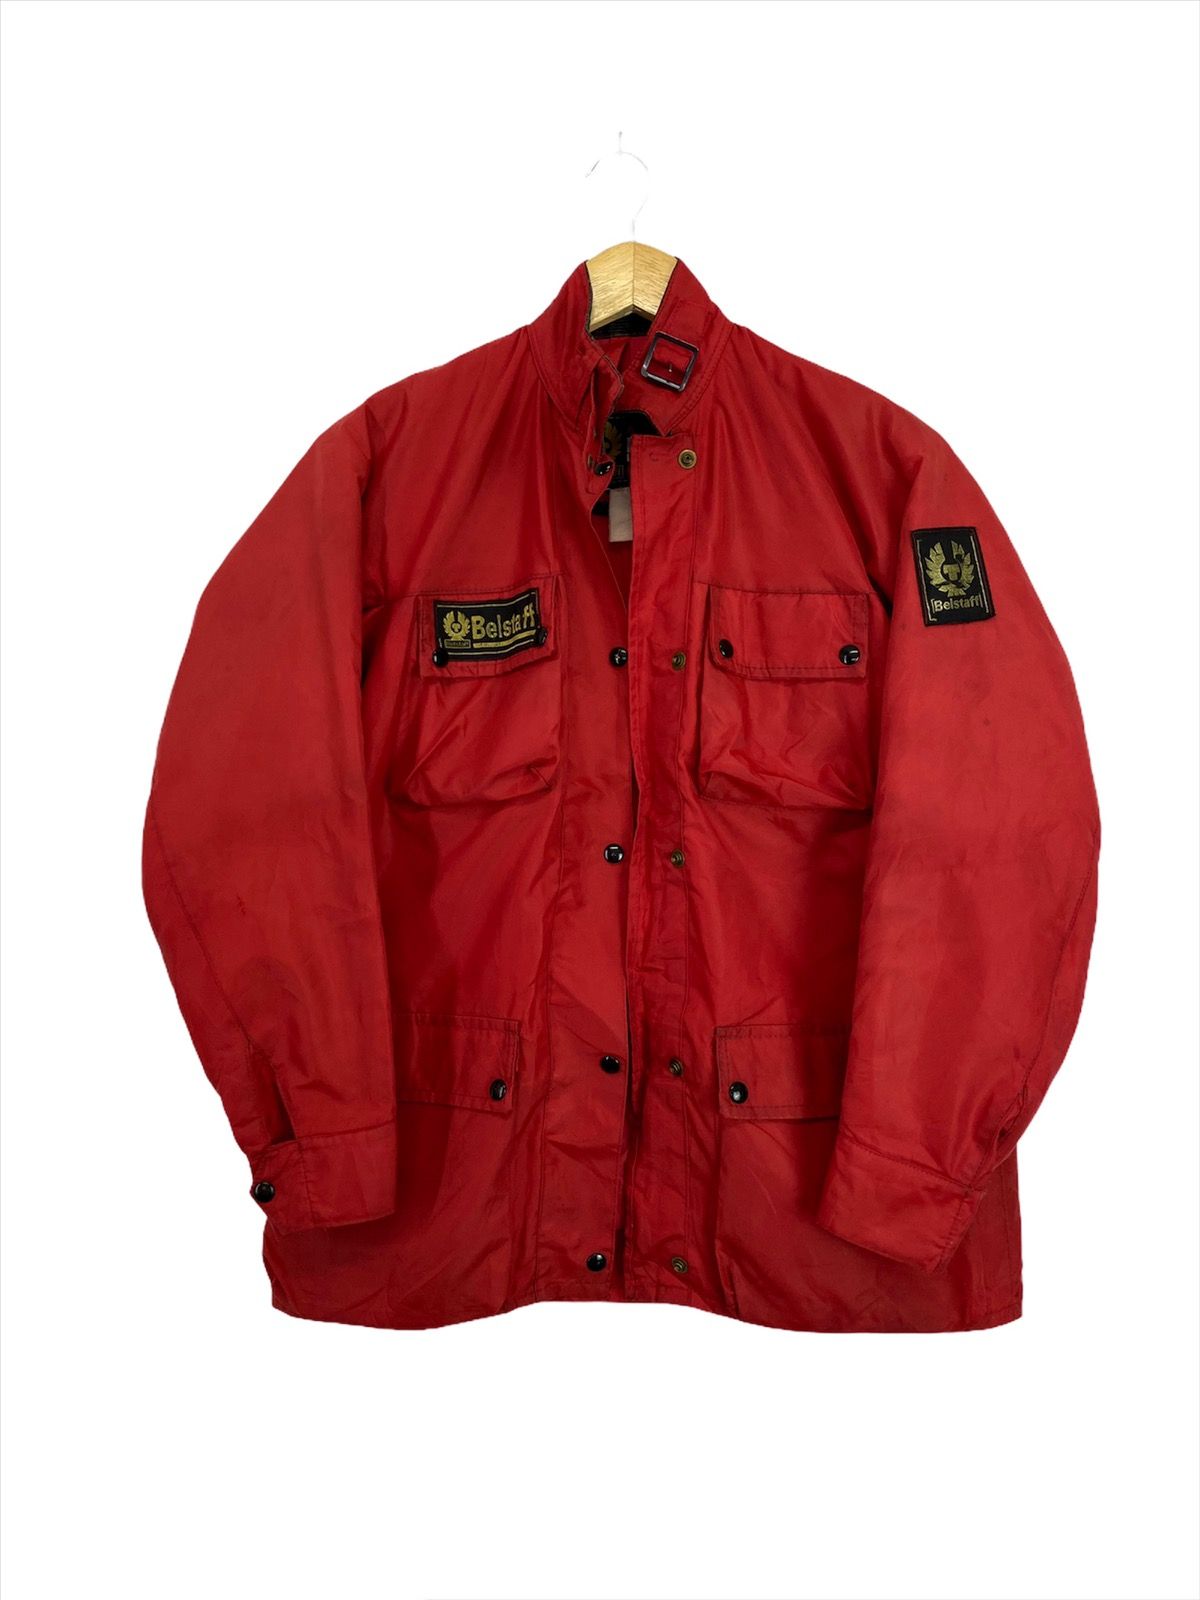 Rare! Belstaff LX500 International Made in England Jacket - 2